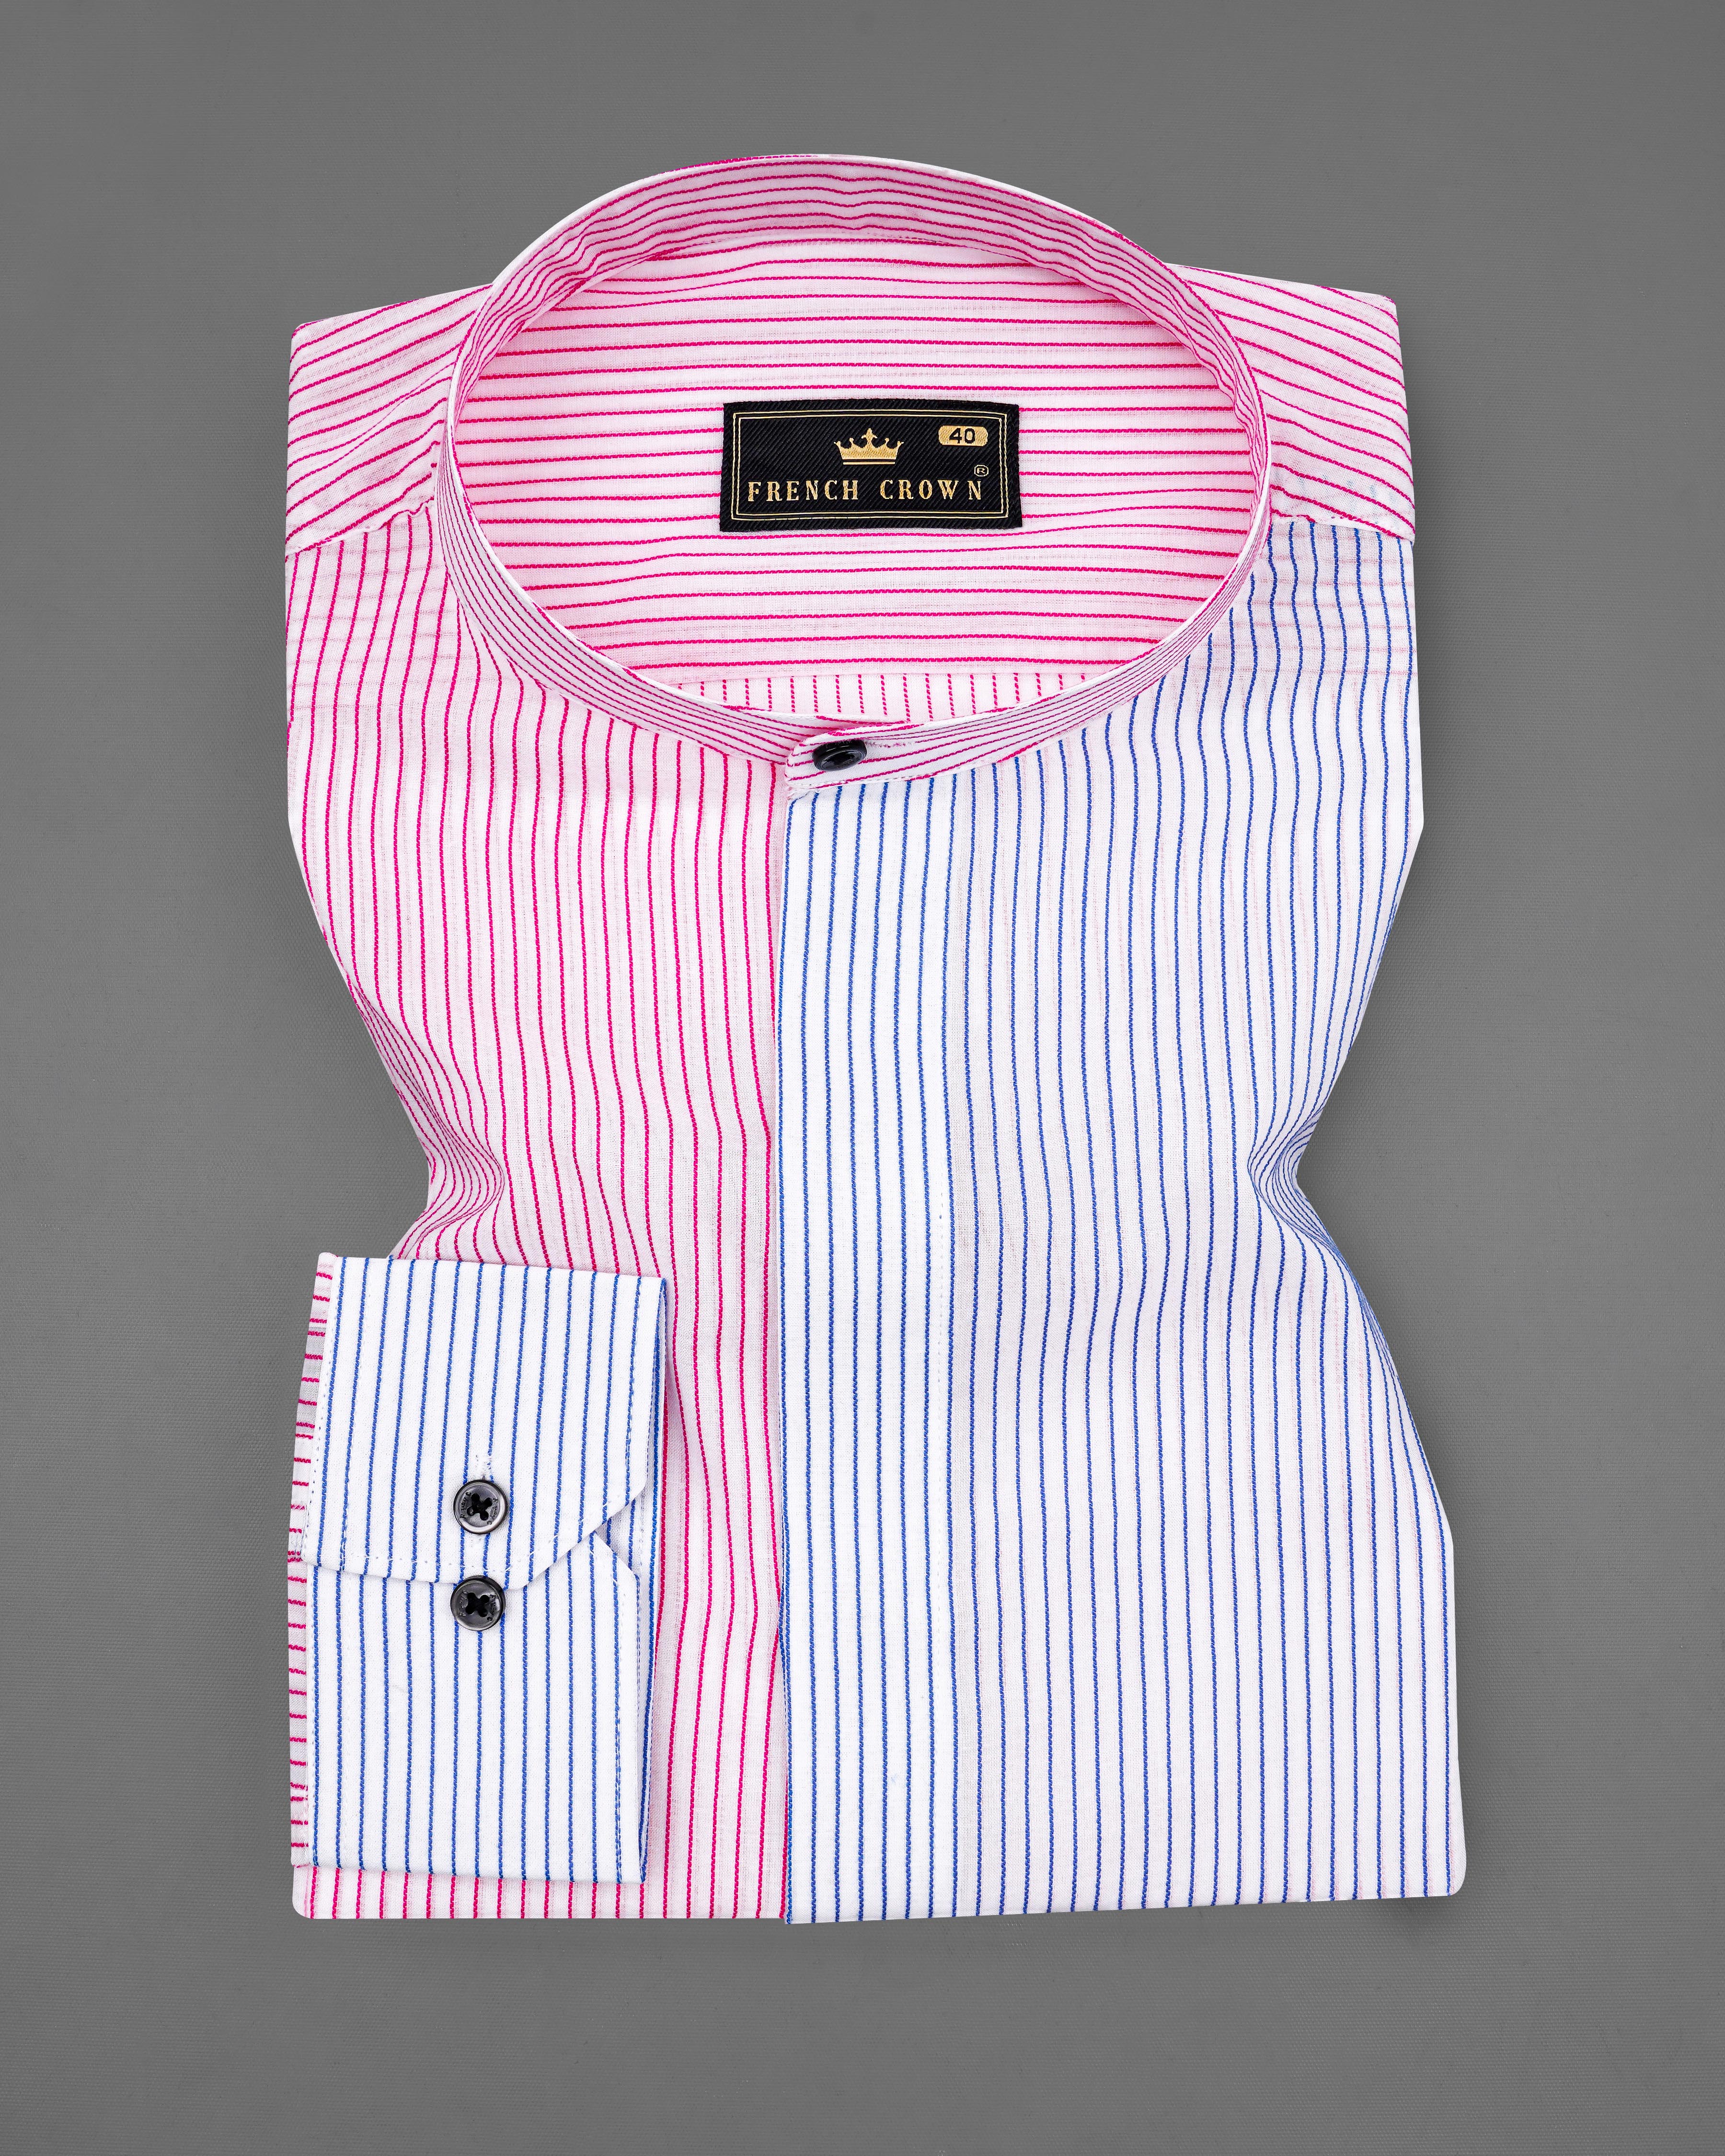 Bright White with Cerise Red and Sapphire Blue Striped Dobby Premium Cotton Designer Shirt 8314-M-BLK-P251 -38,8314-M-BLK-P251 -H-38,8314-M-BLK-P251 -39,8314-M-BLK-P251 -H-39,8314-M-BLK-P251 -40,8314-M-BLK-P251 -H-40,8314-M-BLK-P251 -42,8314-M-BLK-P251 -H-42,8314-M-BLK-P251 -44,8314-M-BLK-P251 -H-44,8314-M-BLK-P251 -46,8314-M-BLK-P251 -H-46,8314-M-BLK-P251 -48,8314-M-BLK-P251 -H-48,8314-M-BLK-P251 -50,8314-M-BLK-P251 -H-50,8314-M-BLK-P251 -52,8314-M-BLK-P251 -H-52